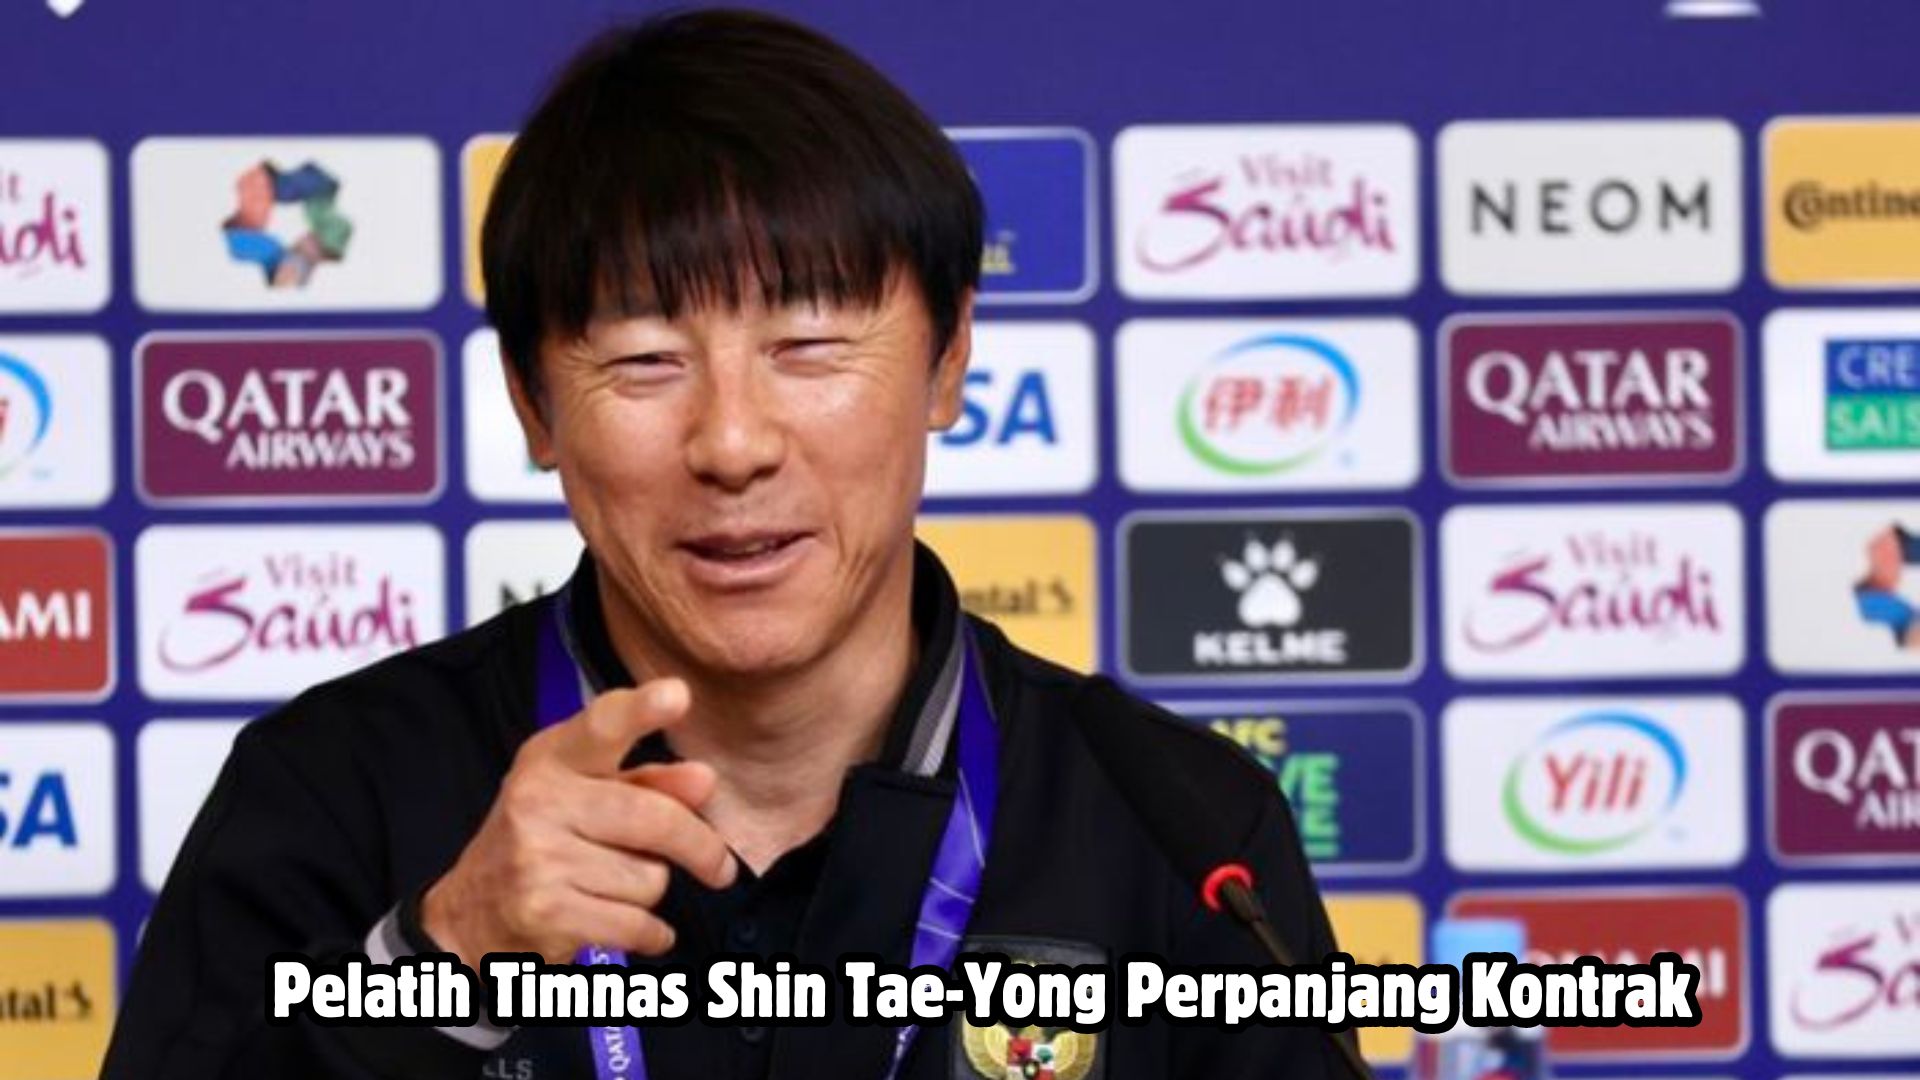 Pelatih Timnas Shin Tae-Yong Lanjut Perpanjangan Kontrak, PSSI Singgung soal Kenaikan Gaji